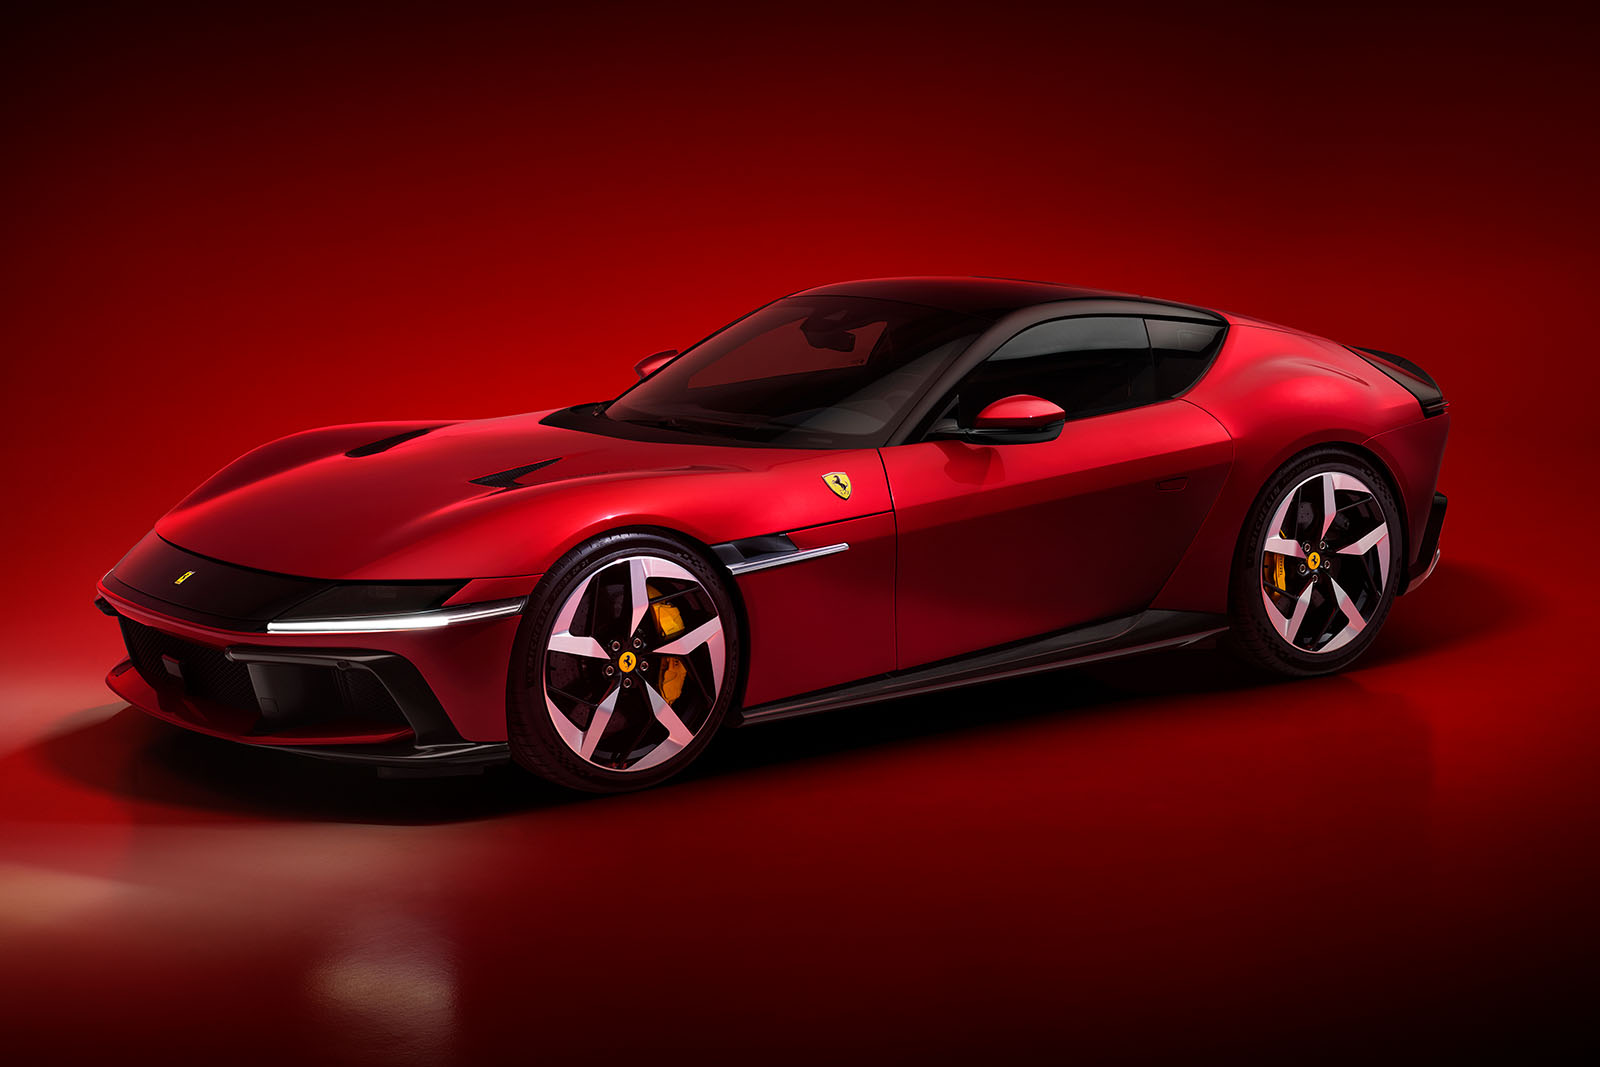 Ferrari 12Cilindri revealed as 819bhp GT with screaming V12